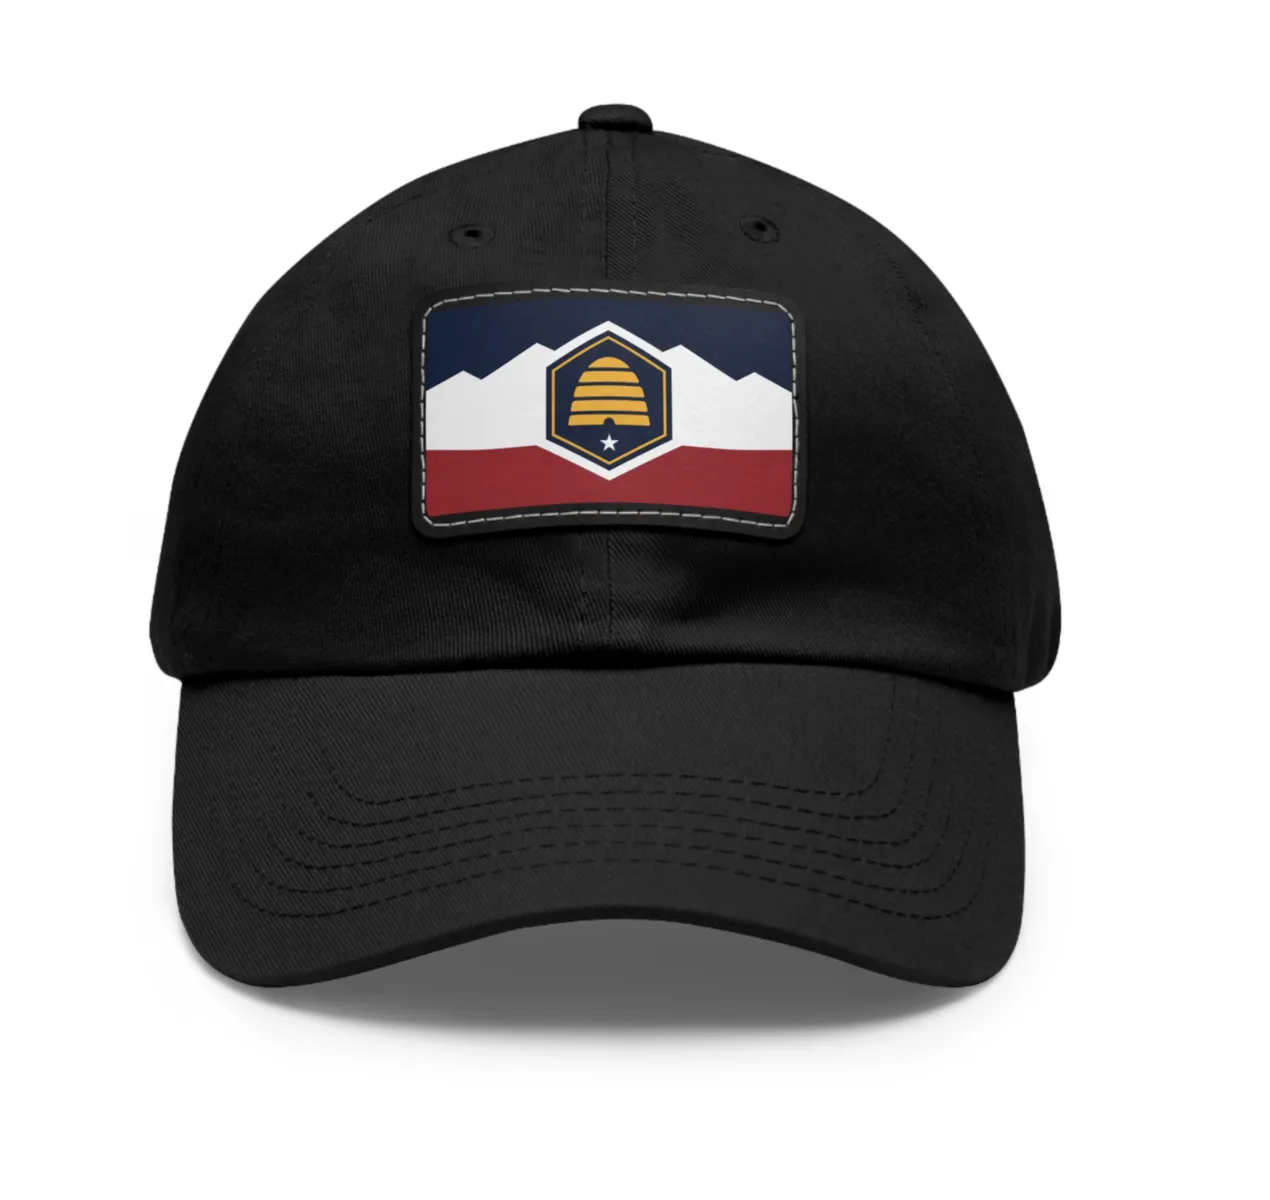 New Utah Flag Baseball Cap Hat - Black